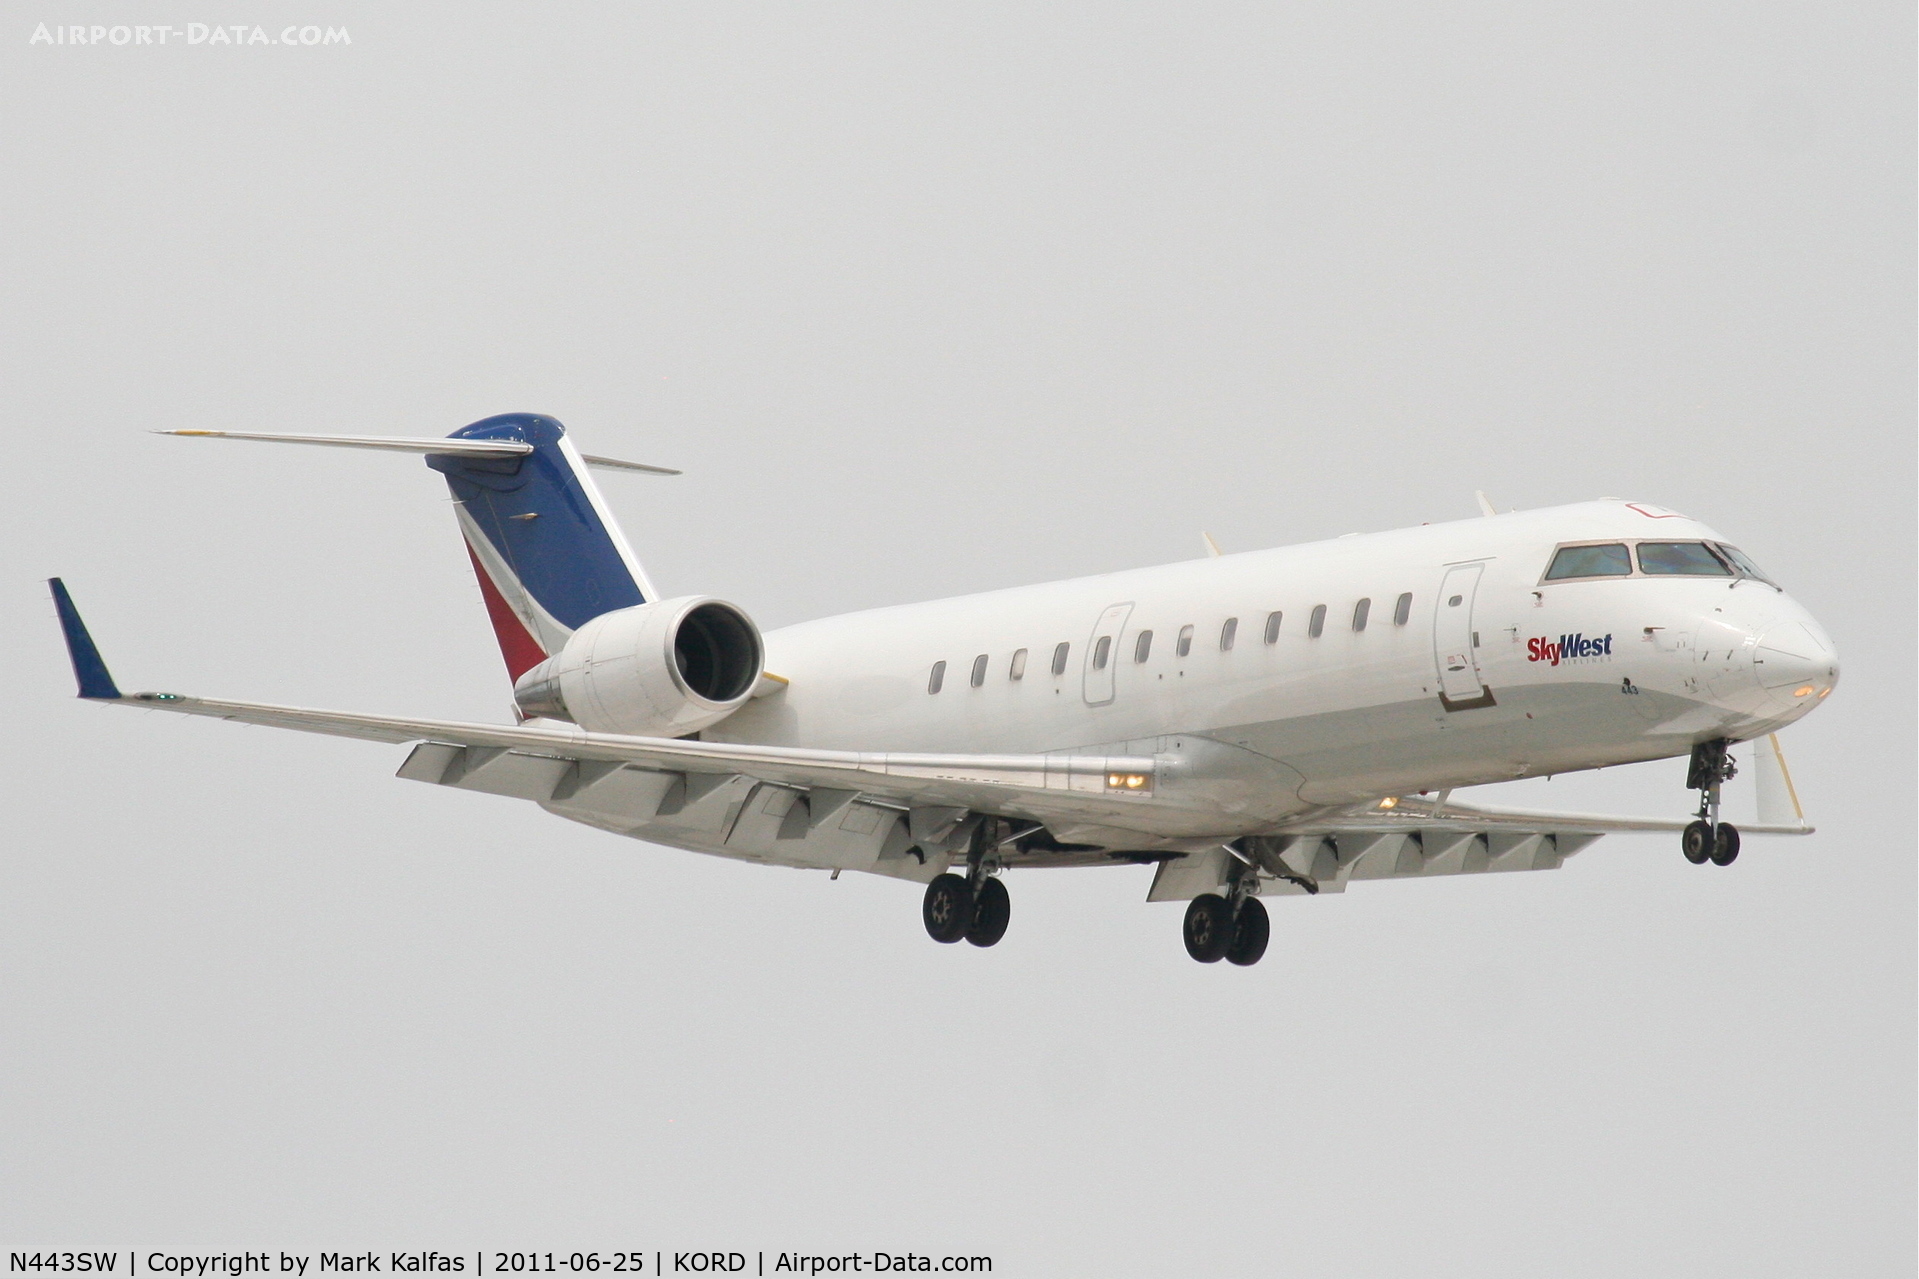 N443SW, 2002 Bombardier CRJ-200LR (CL-600-2B19) C/N 7638, SkyWest Bombardier CL-600-2B19, SKW6375, arriving from KCMX, RWY 14R approach KORD.